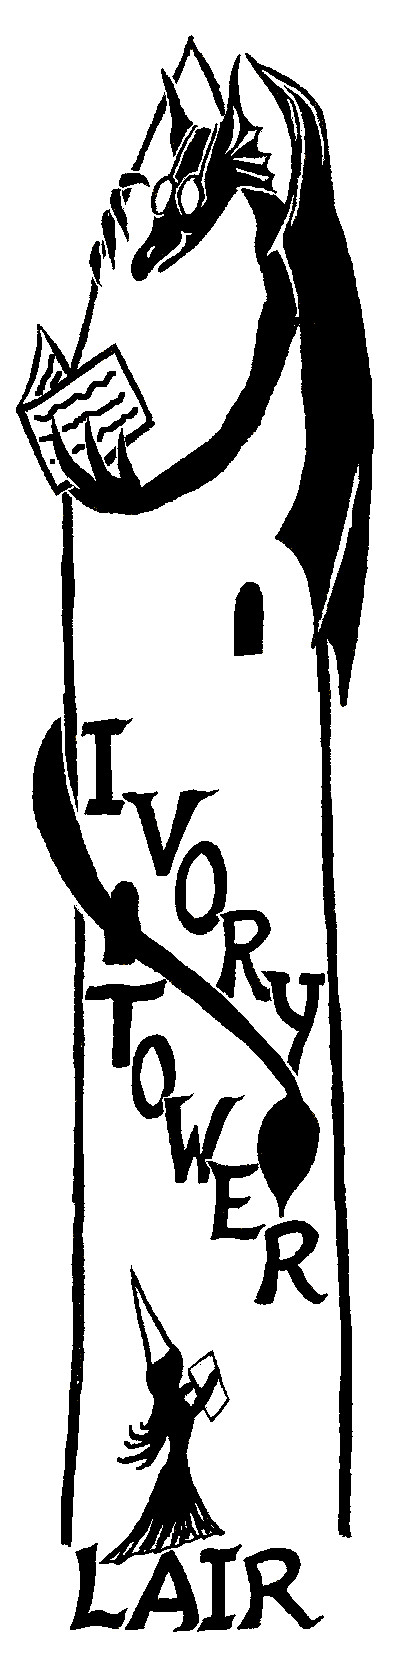 Ivory Tower Lair Logo